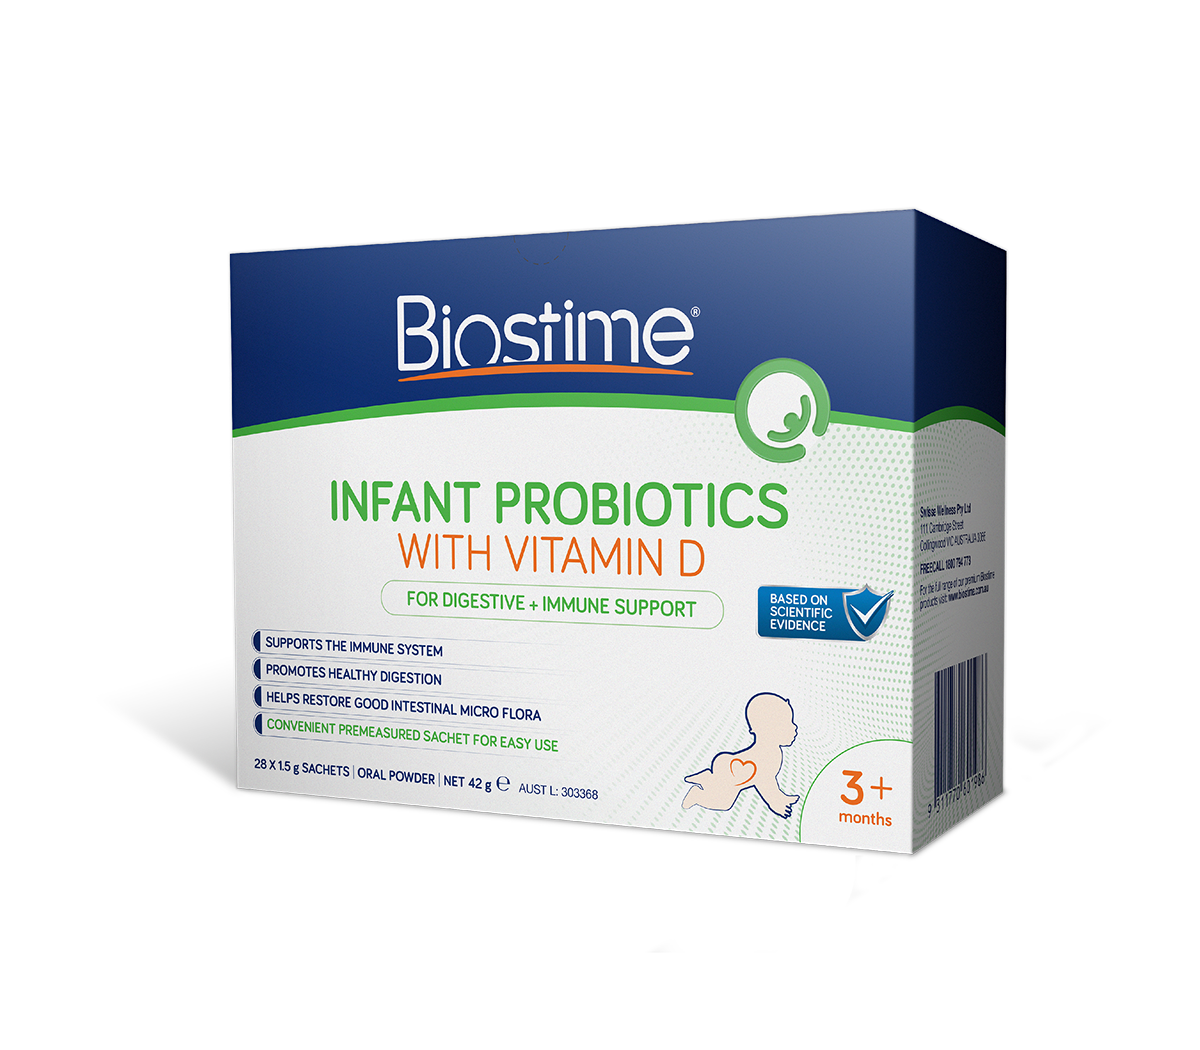 Biostime ® Infant Probiotics with Vitamin D